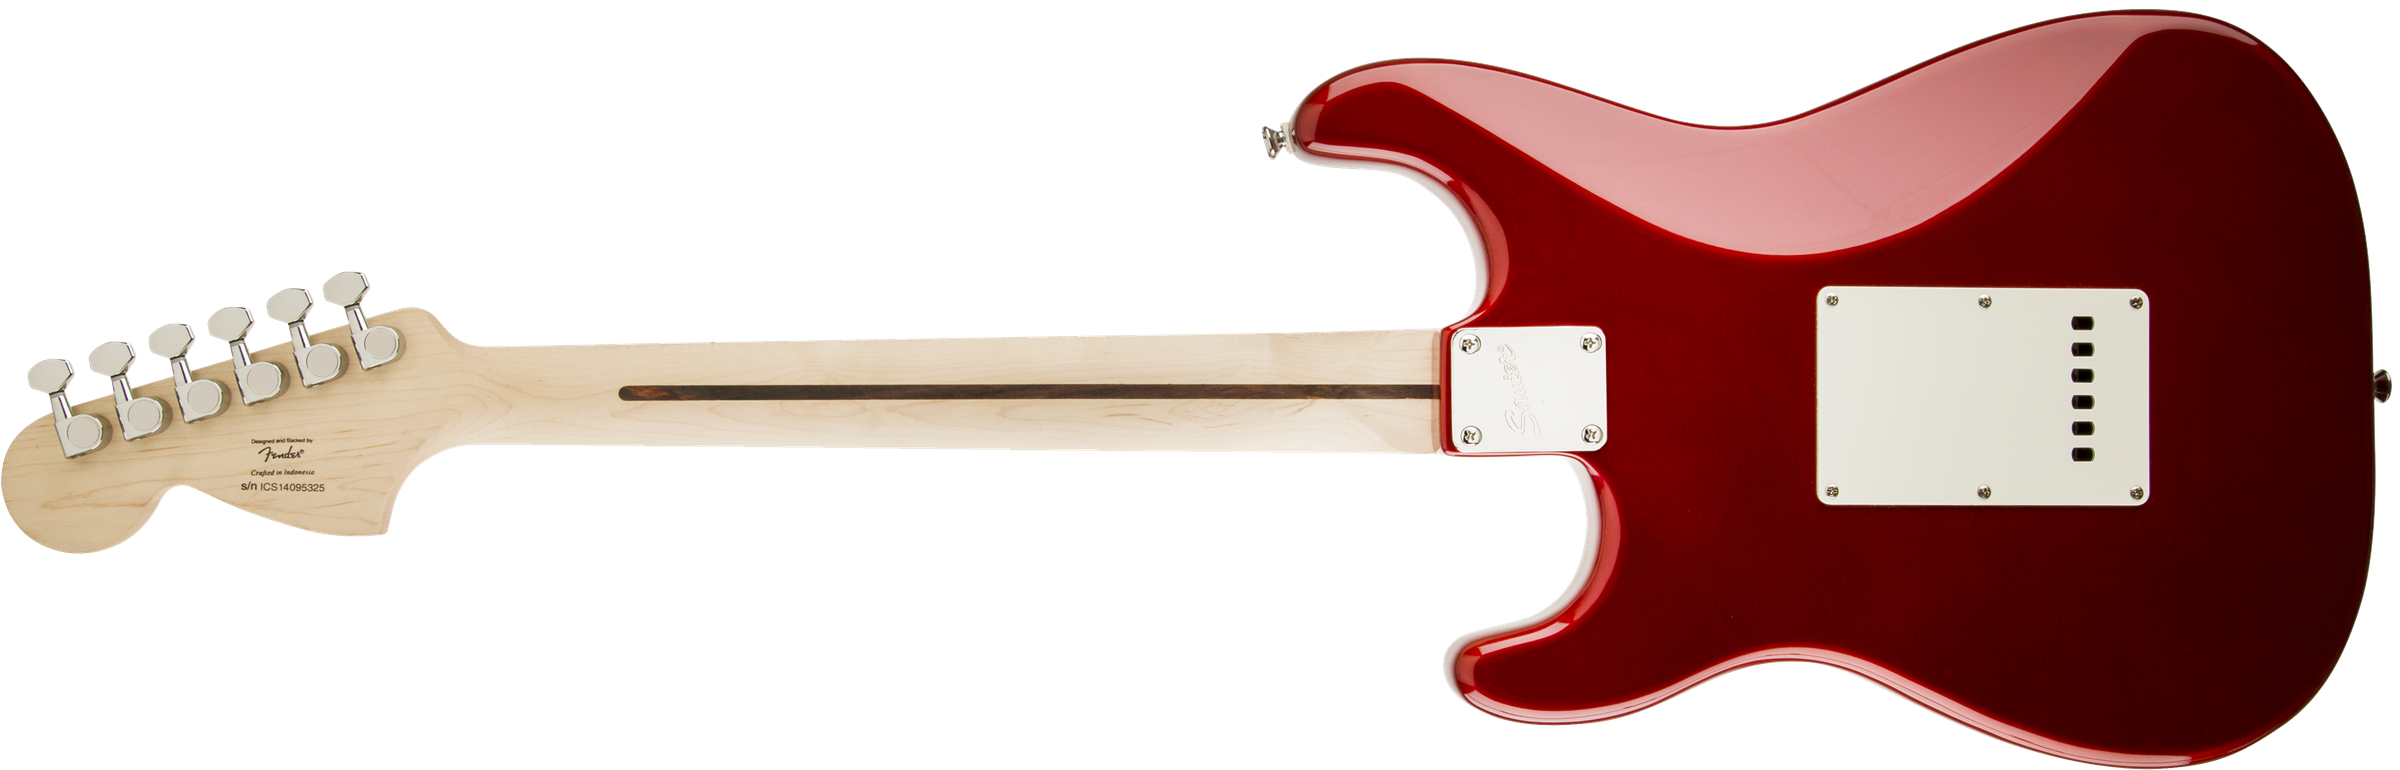 Squier Strat Standard Mn - Candy Apple Red - E-Gitarre in Str-Form - Variation 1